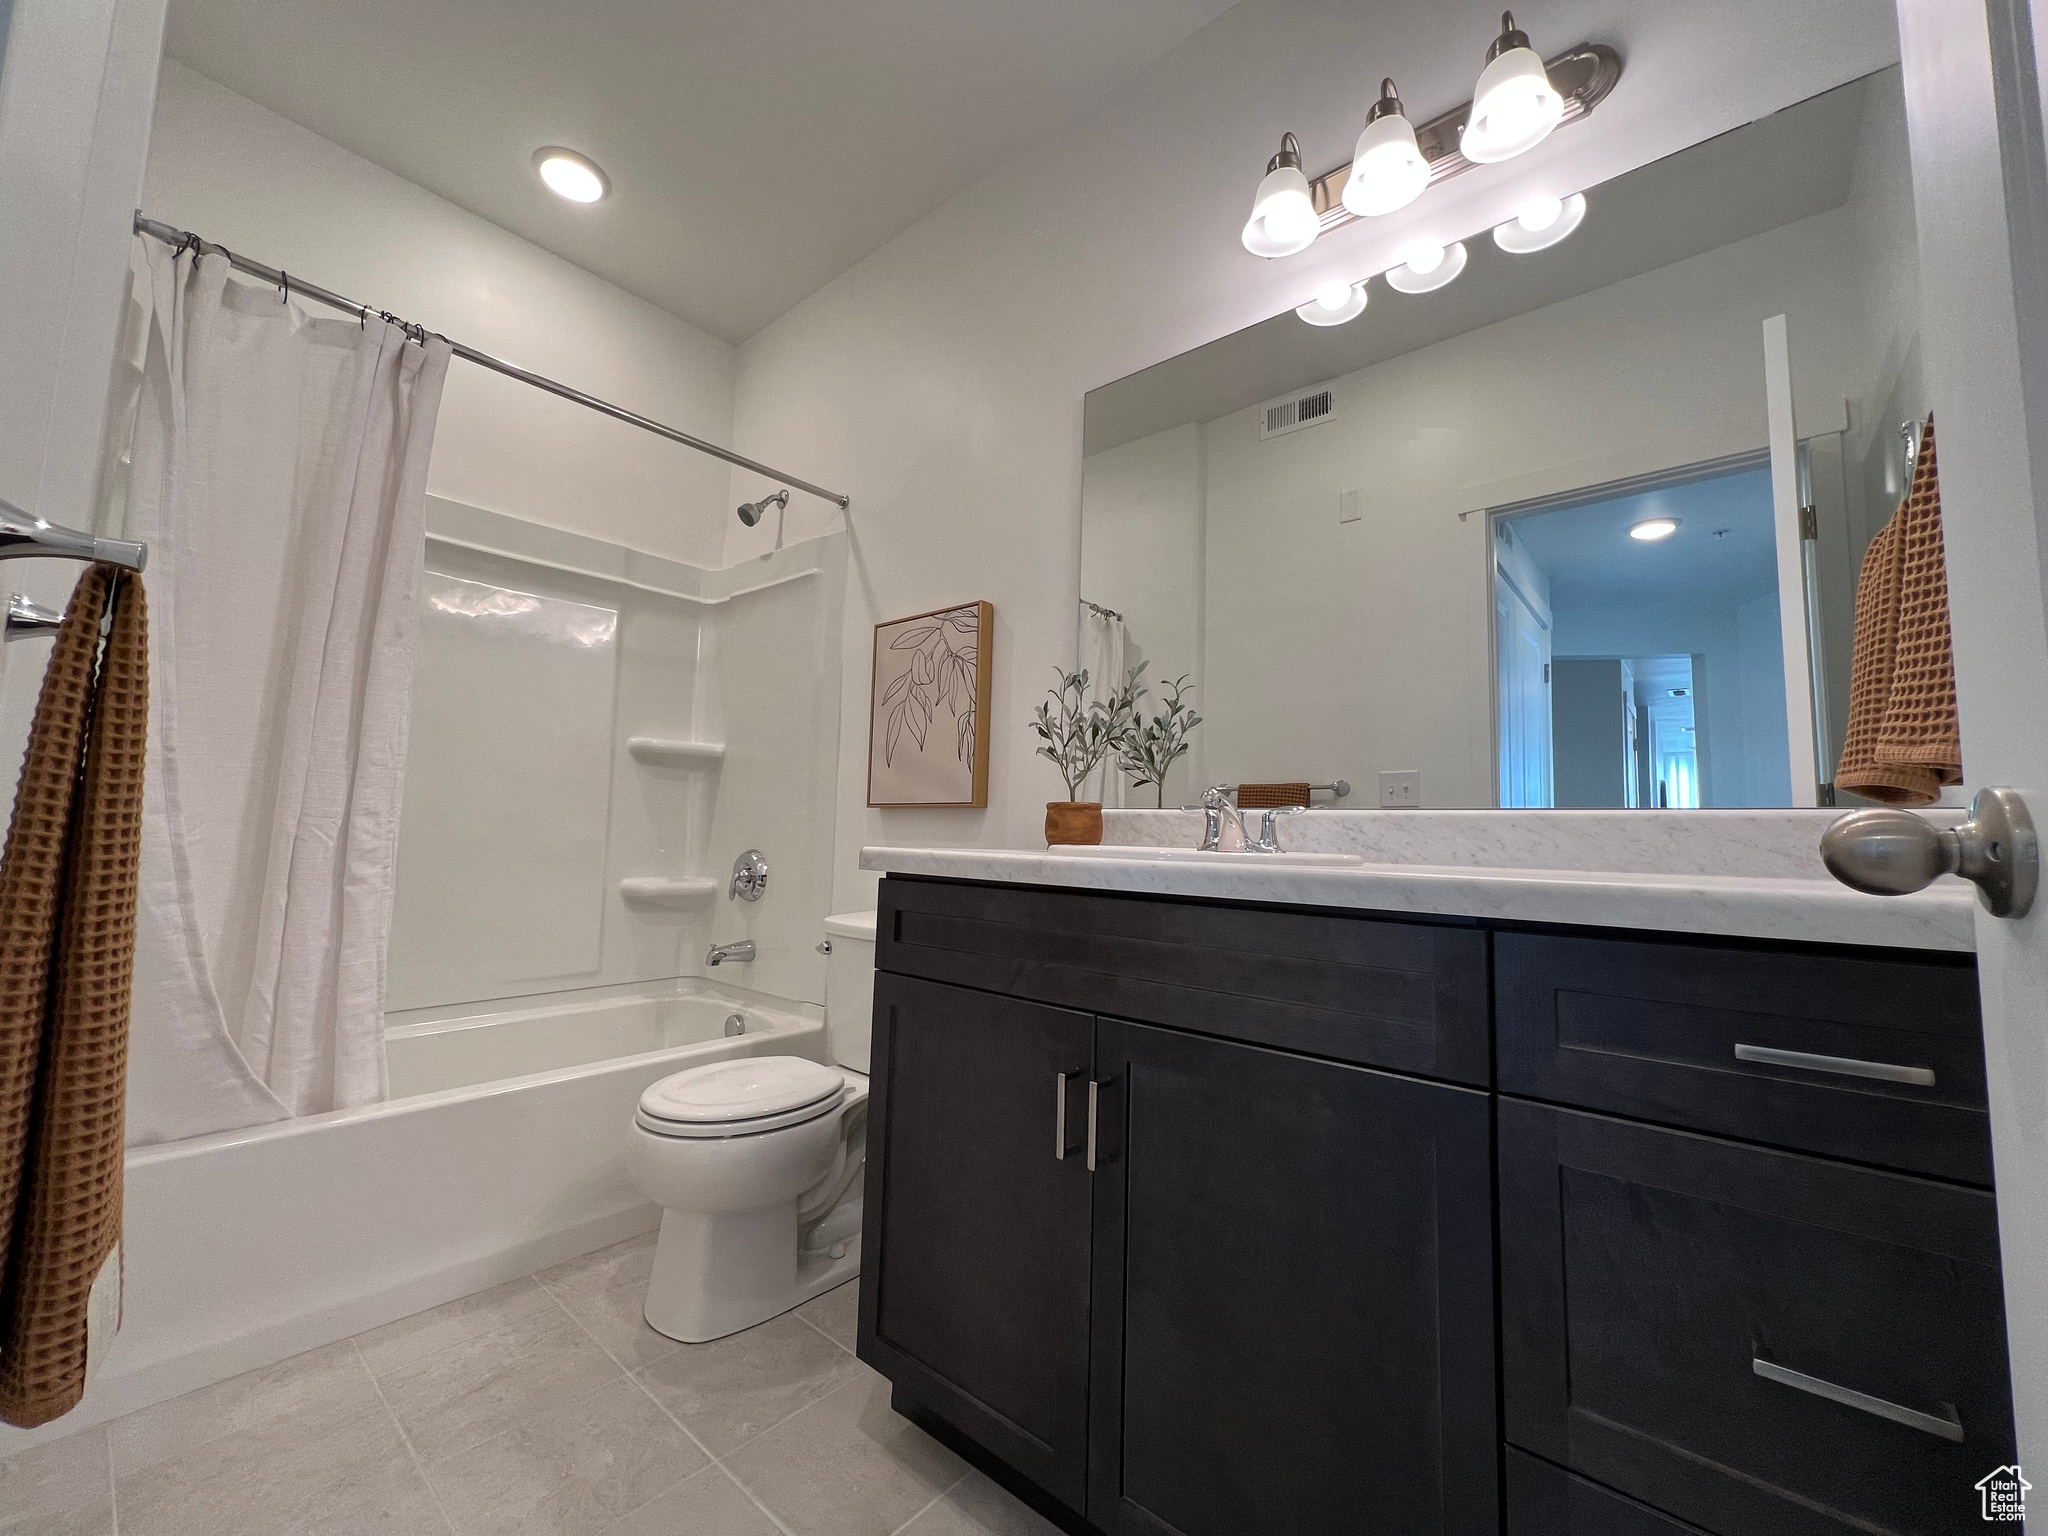 Full bathroom with shower / bath combo, toilet, tile floors, and vanity